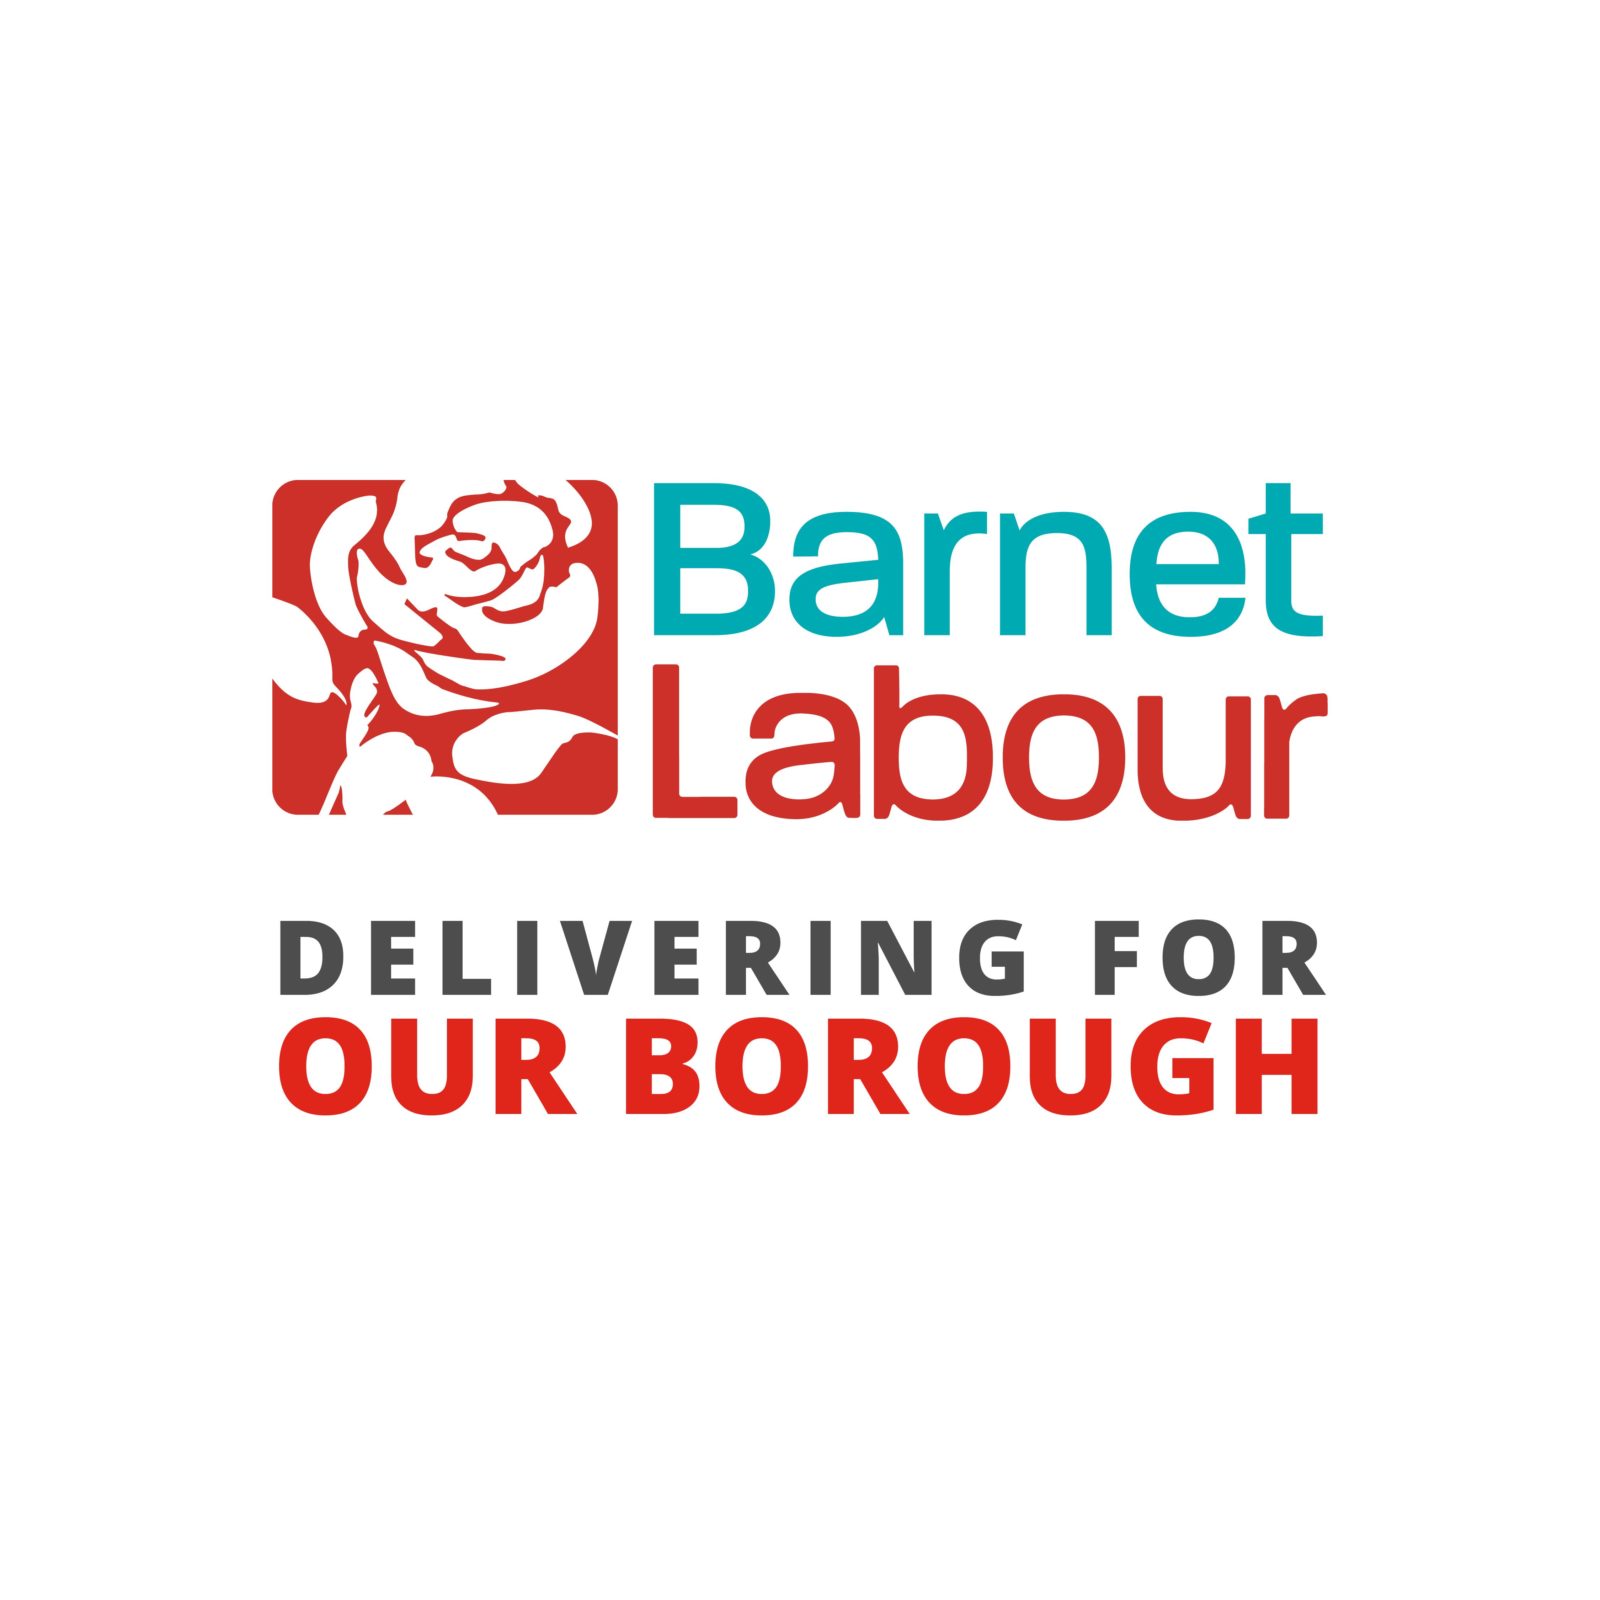 Barnet Labour: Delivering for our borough